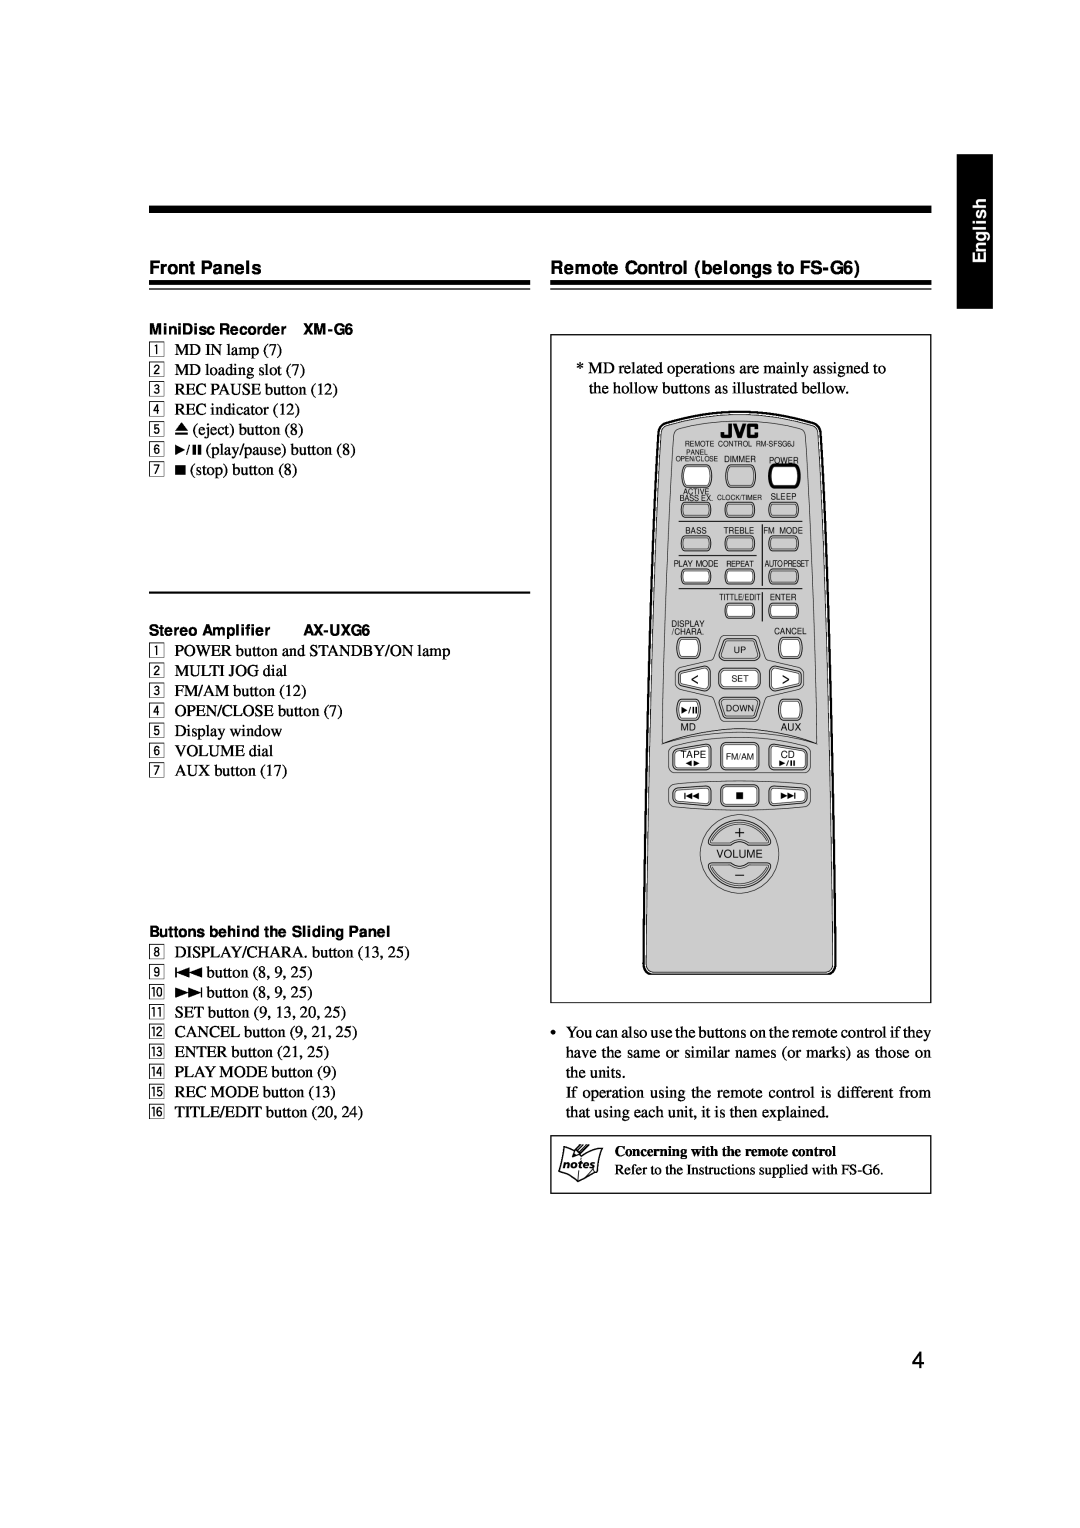 JVC 0200JTMMDWJSCEN Front Panels, Remote Control belongs to FS-G6, MiniDisc Recorder XM-G6, Stereo Amplifier, English 